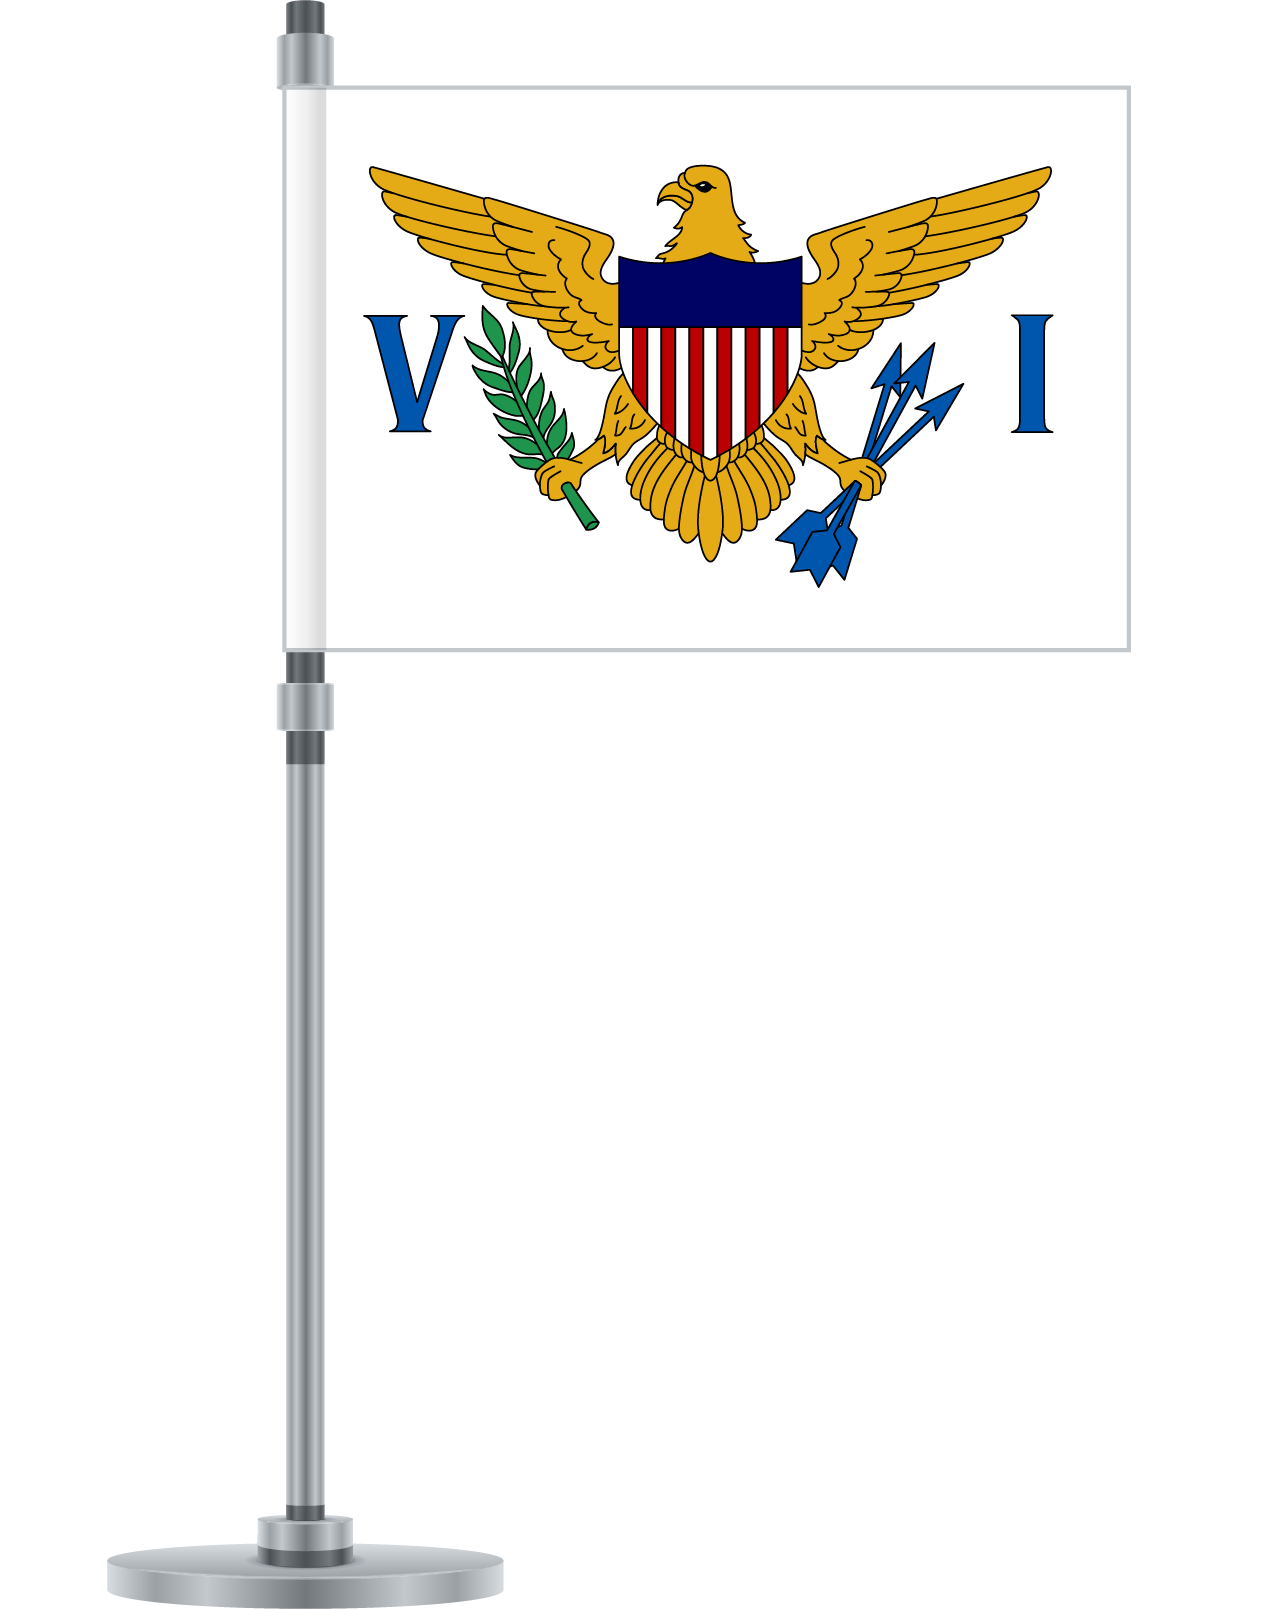 US Virgin Islands flag